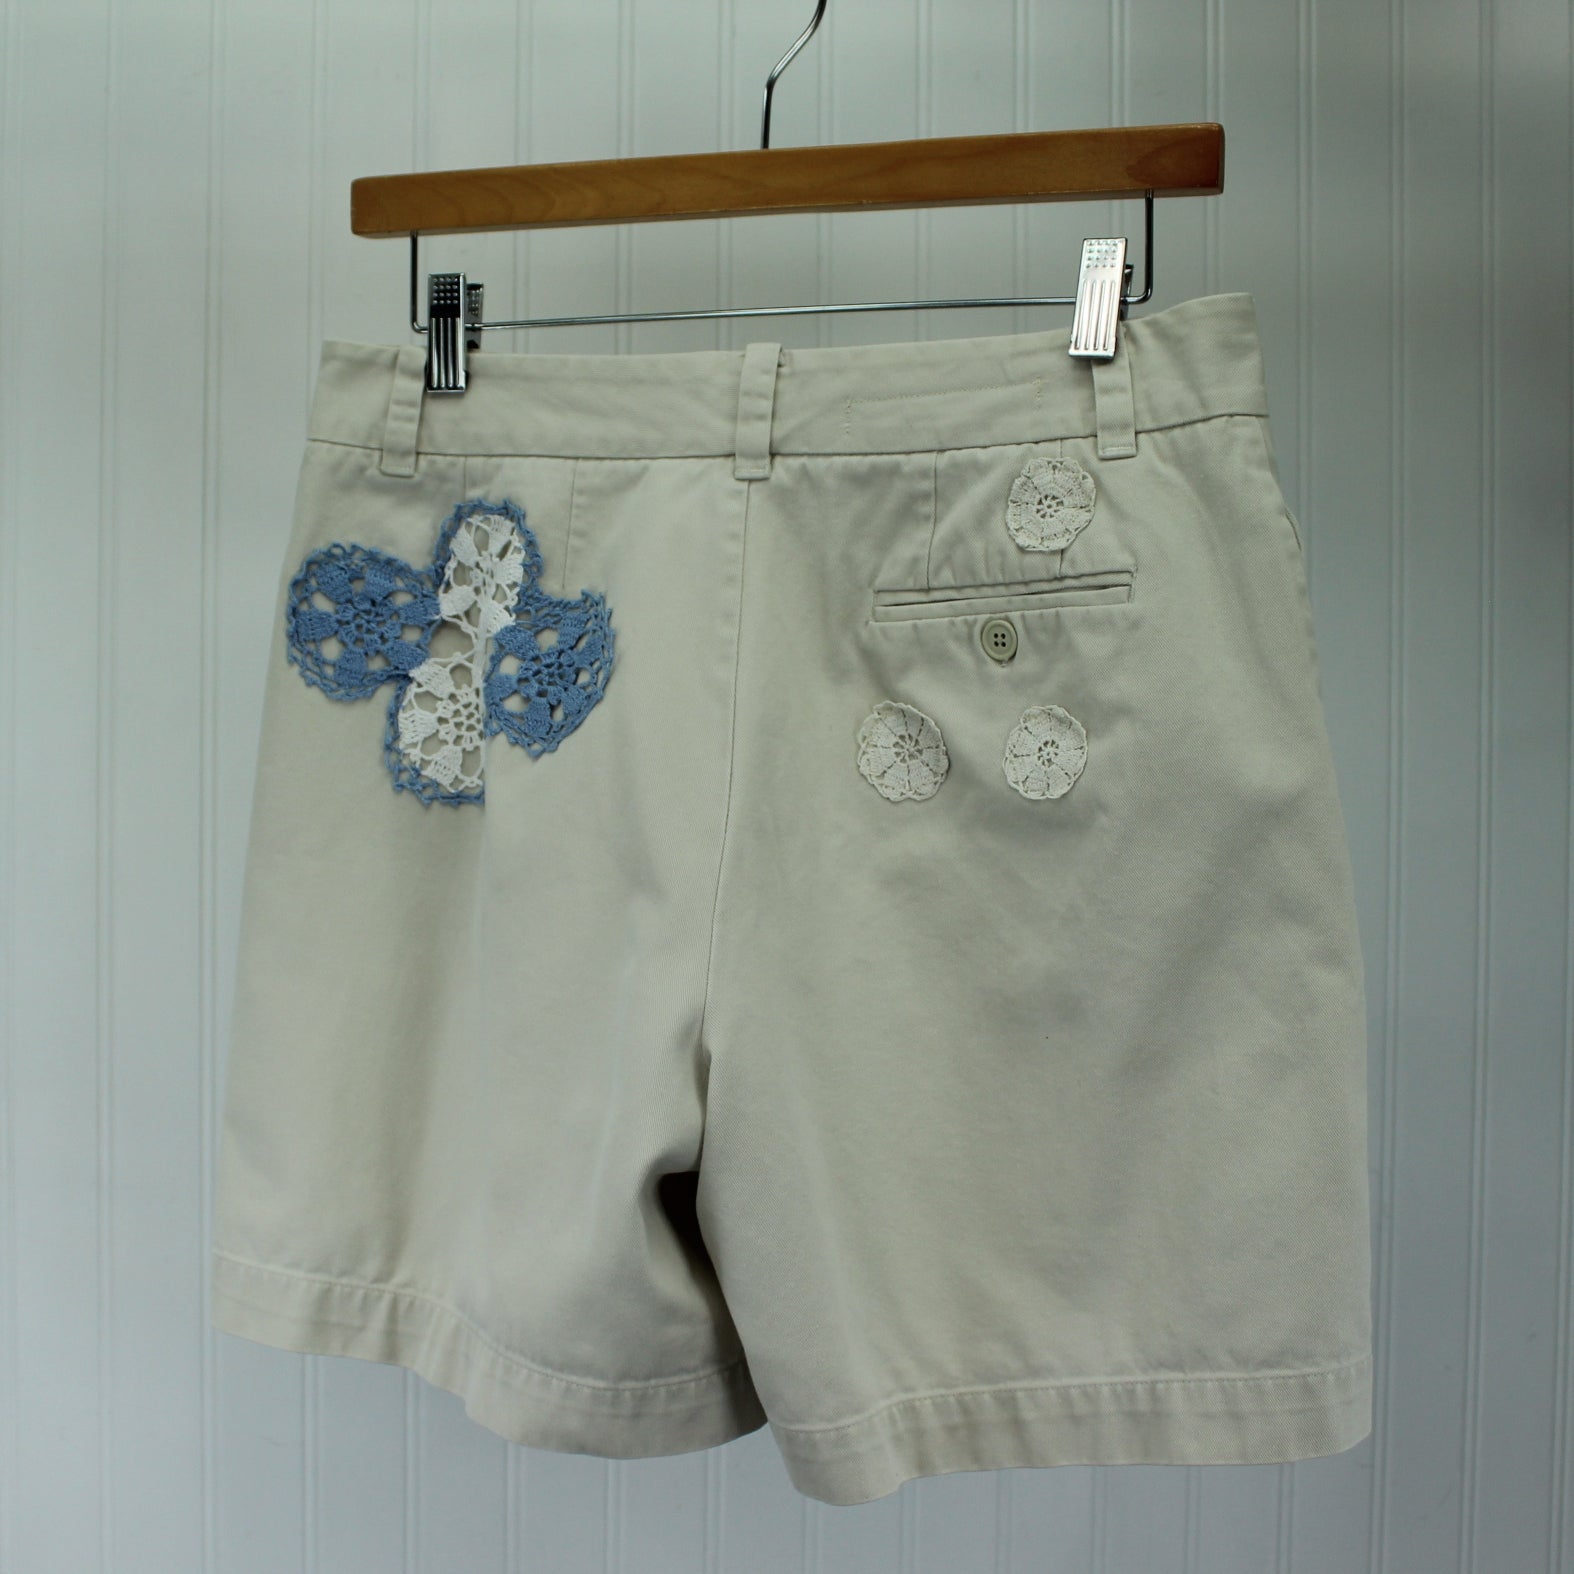 GAP Cotton Khaki Short Pants Patzi Design Enhanced Embroidery Crochet reverse view of pants